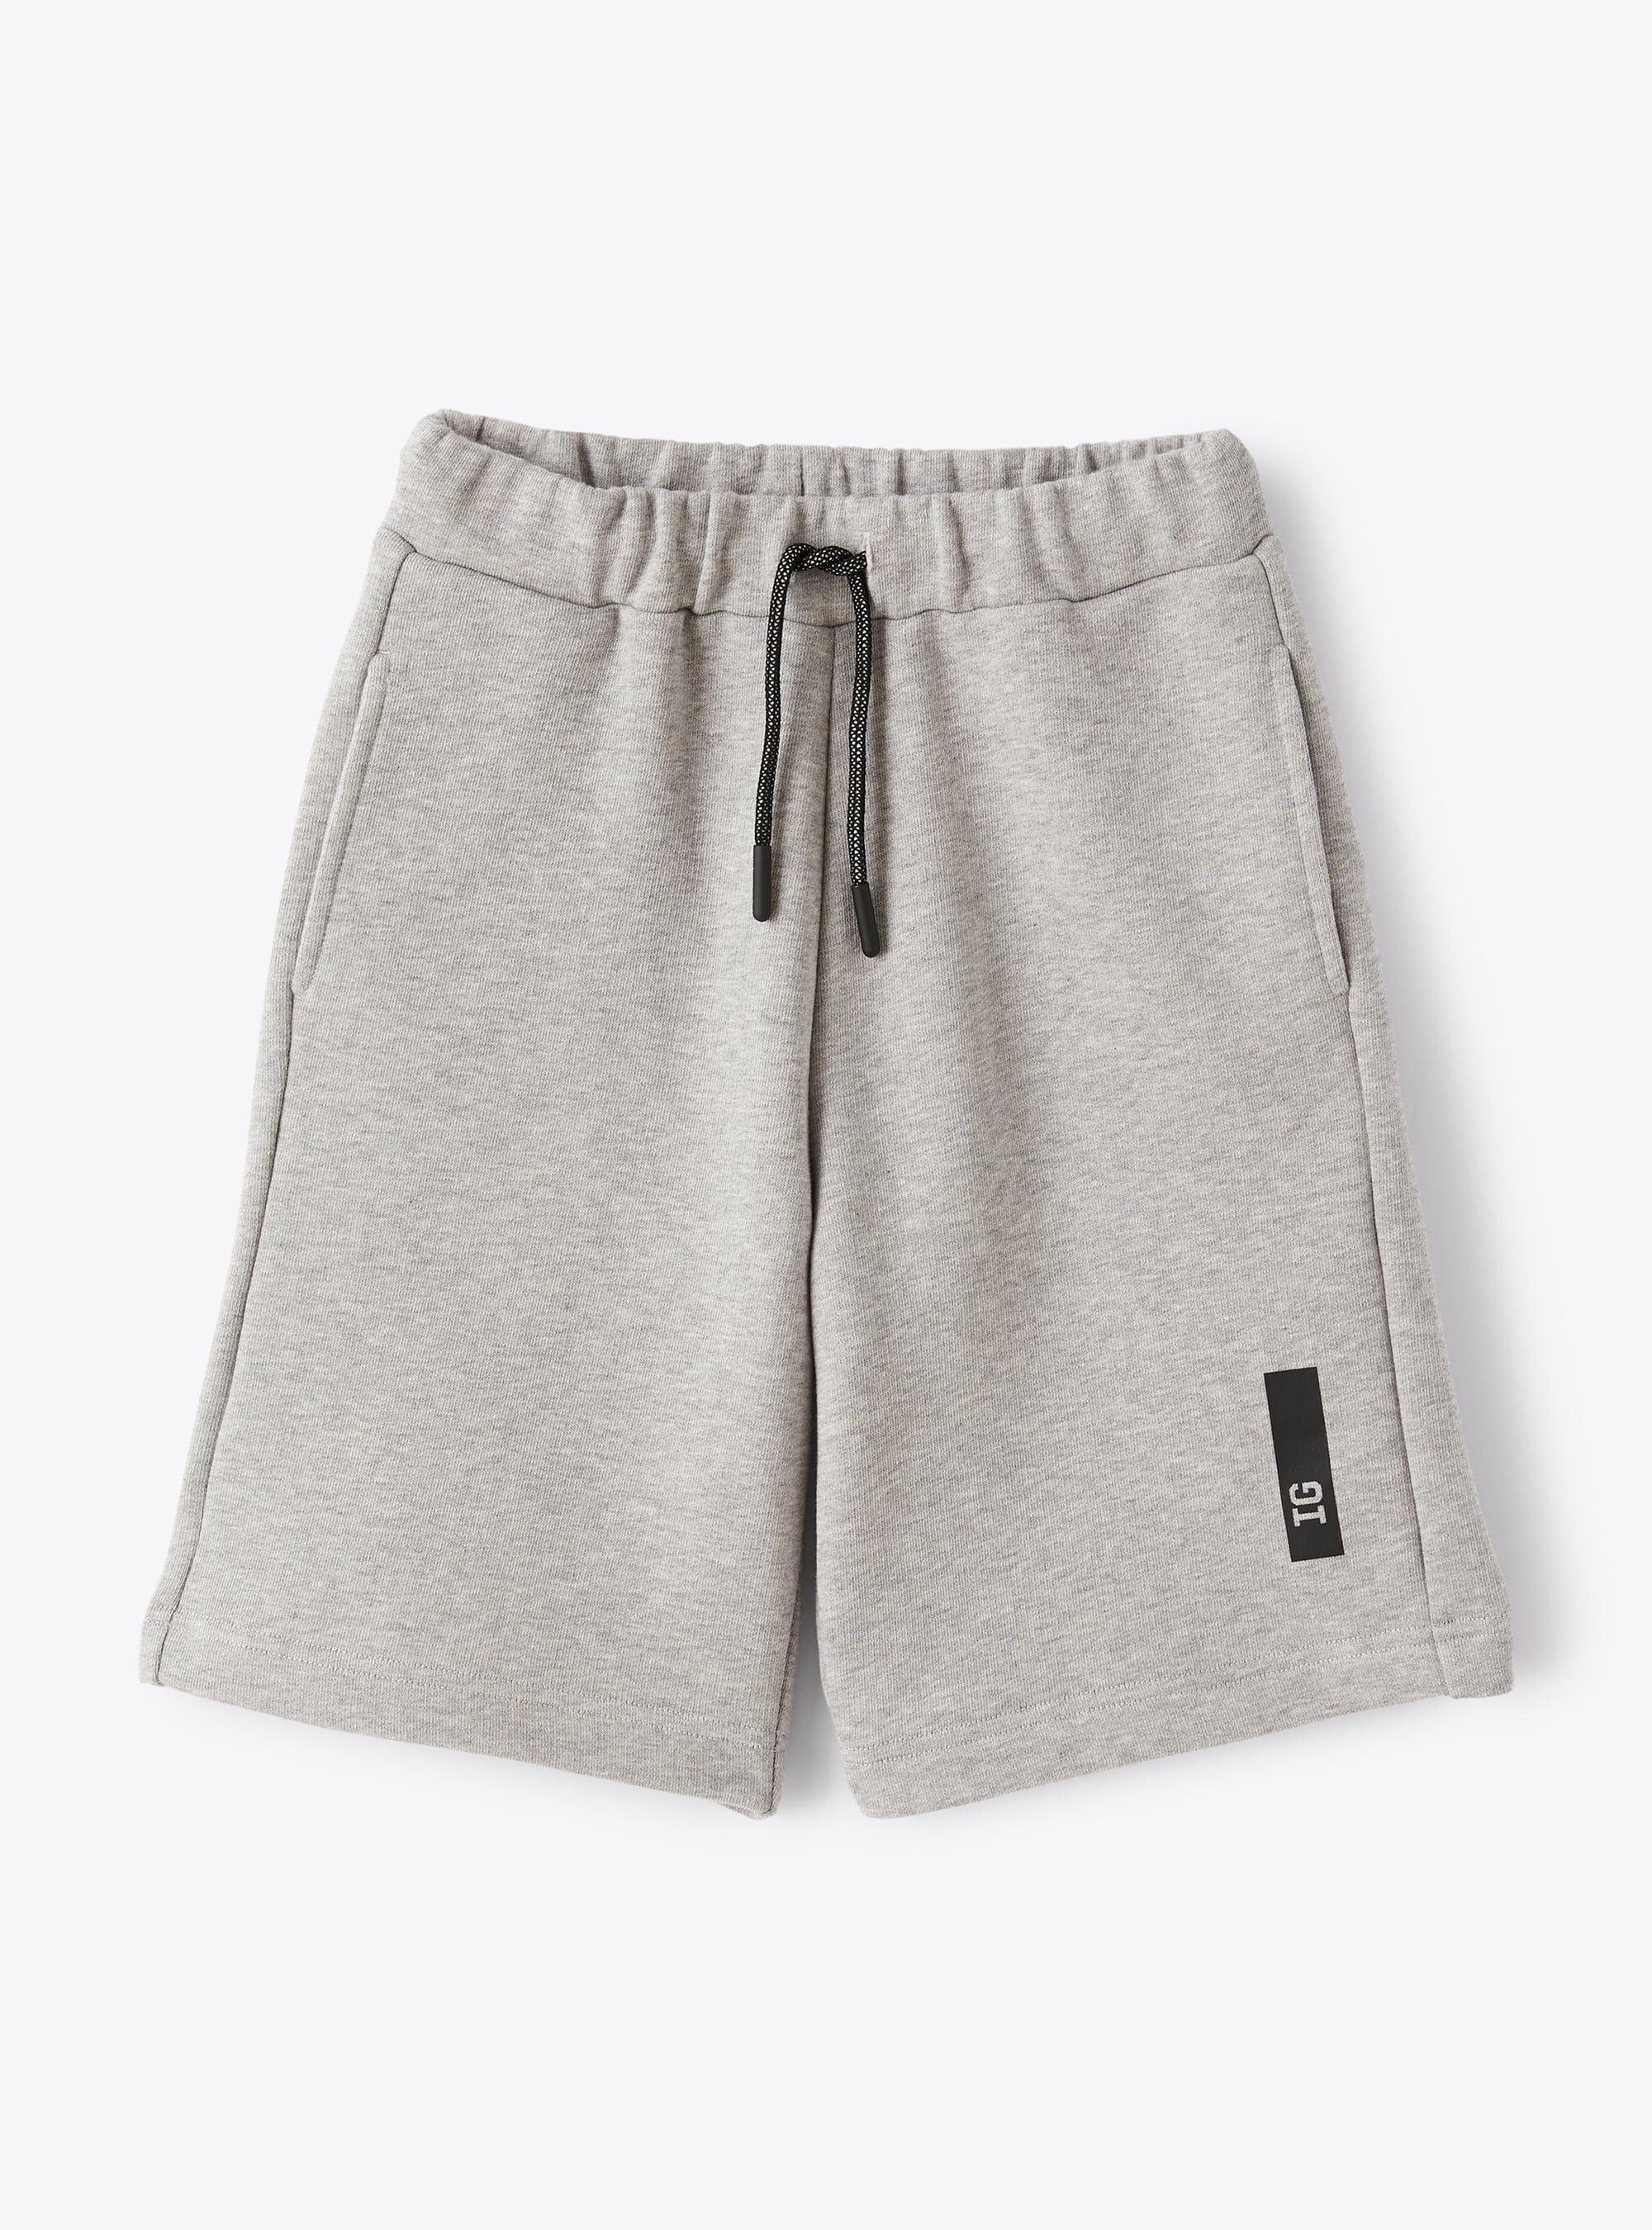 Bermuda shorts in grey fleece with drawstring - Grey | Il Gufo